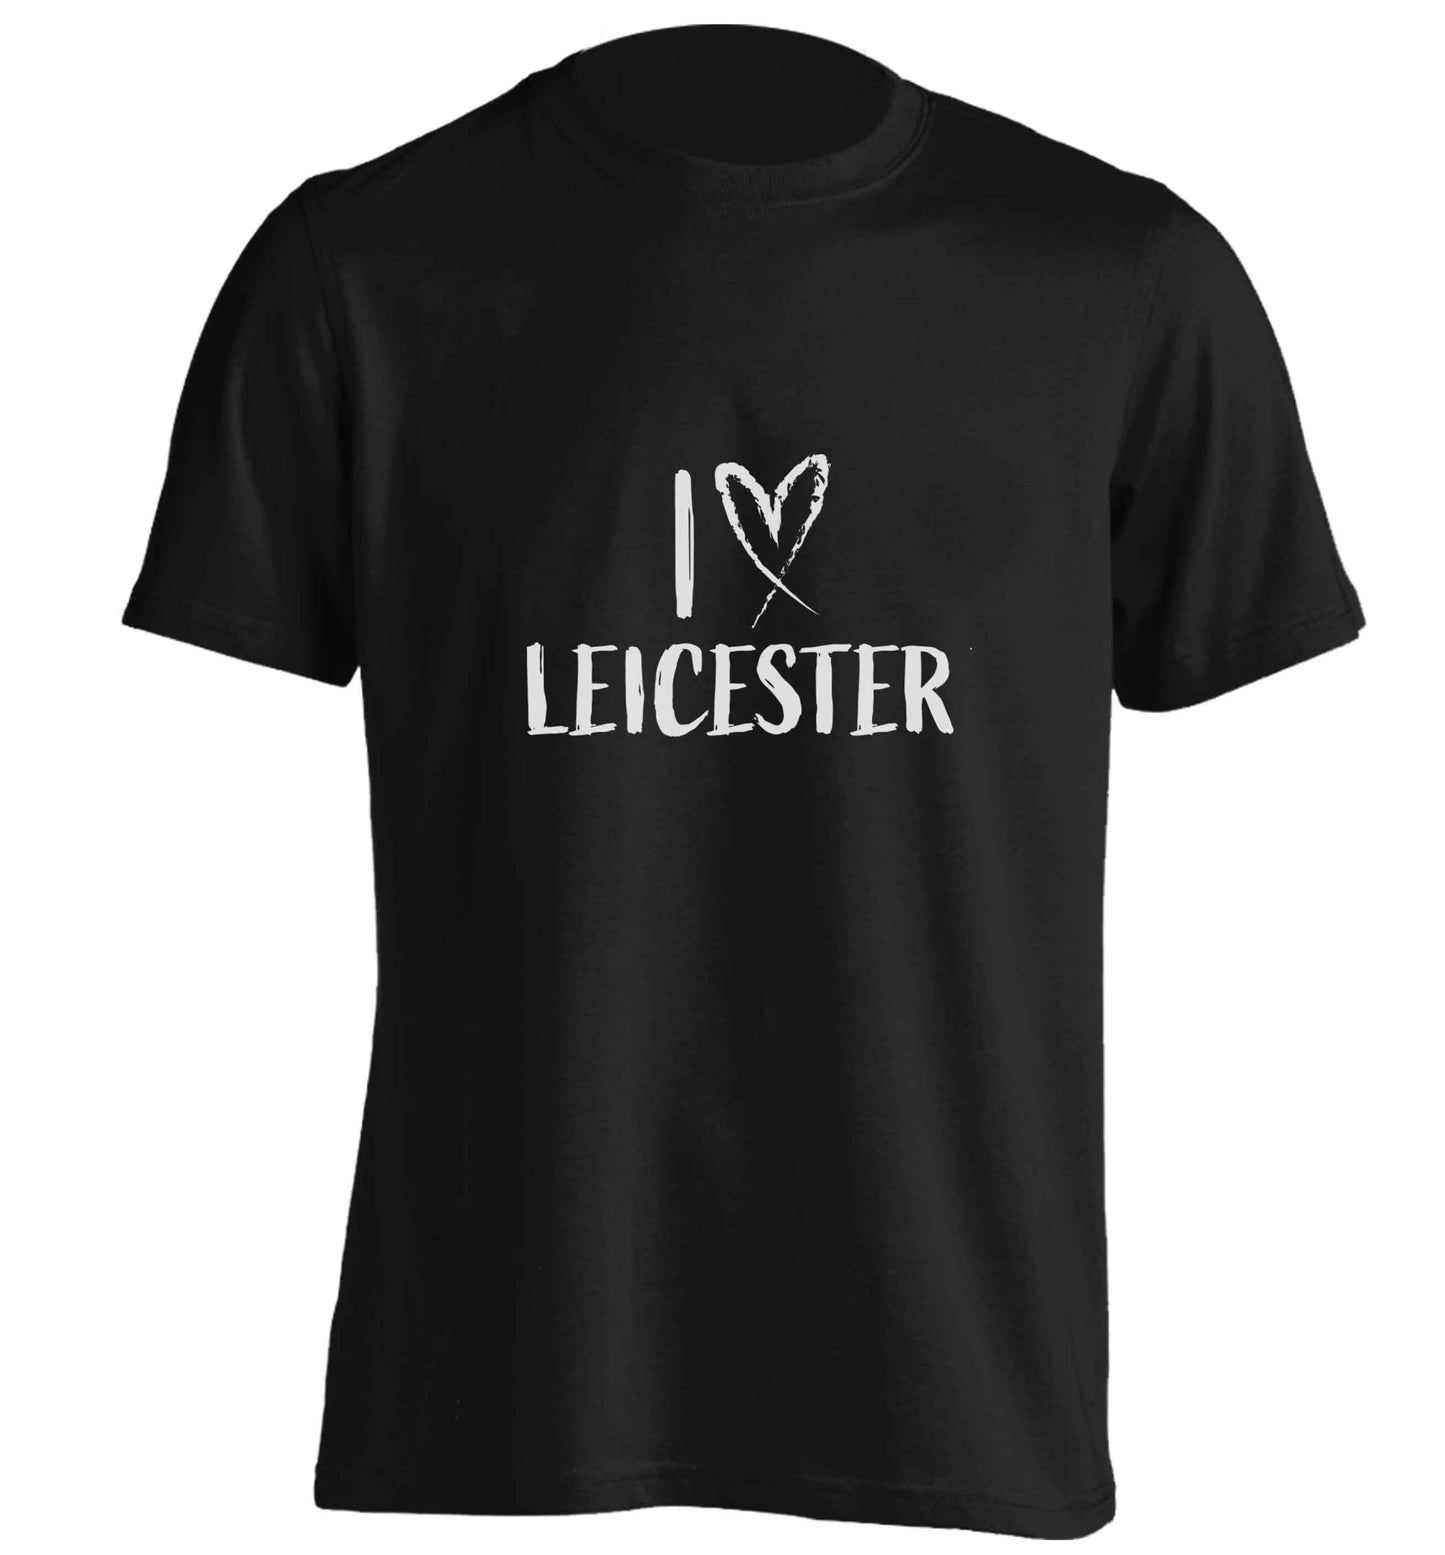 I love Leicester adults unisex black Tshirt 2XL